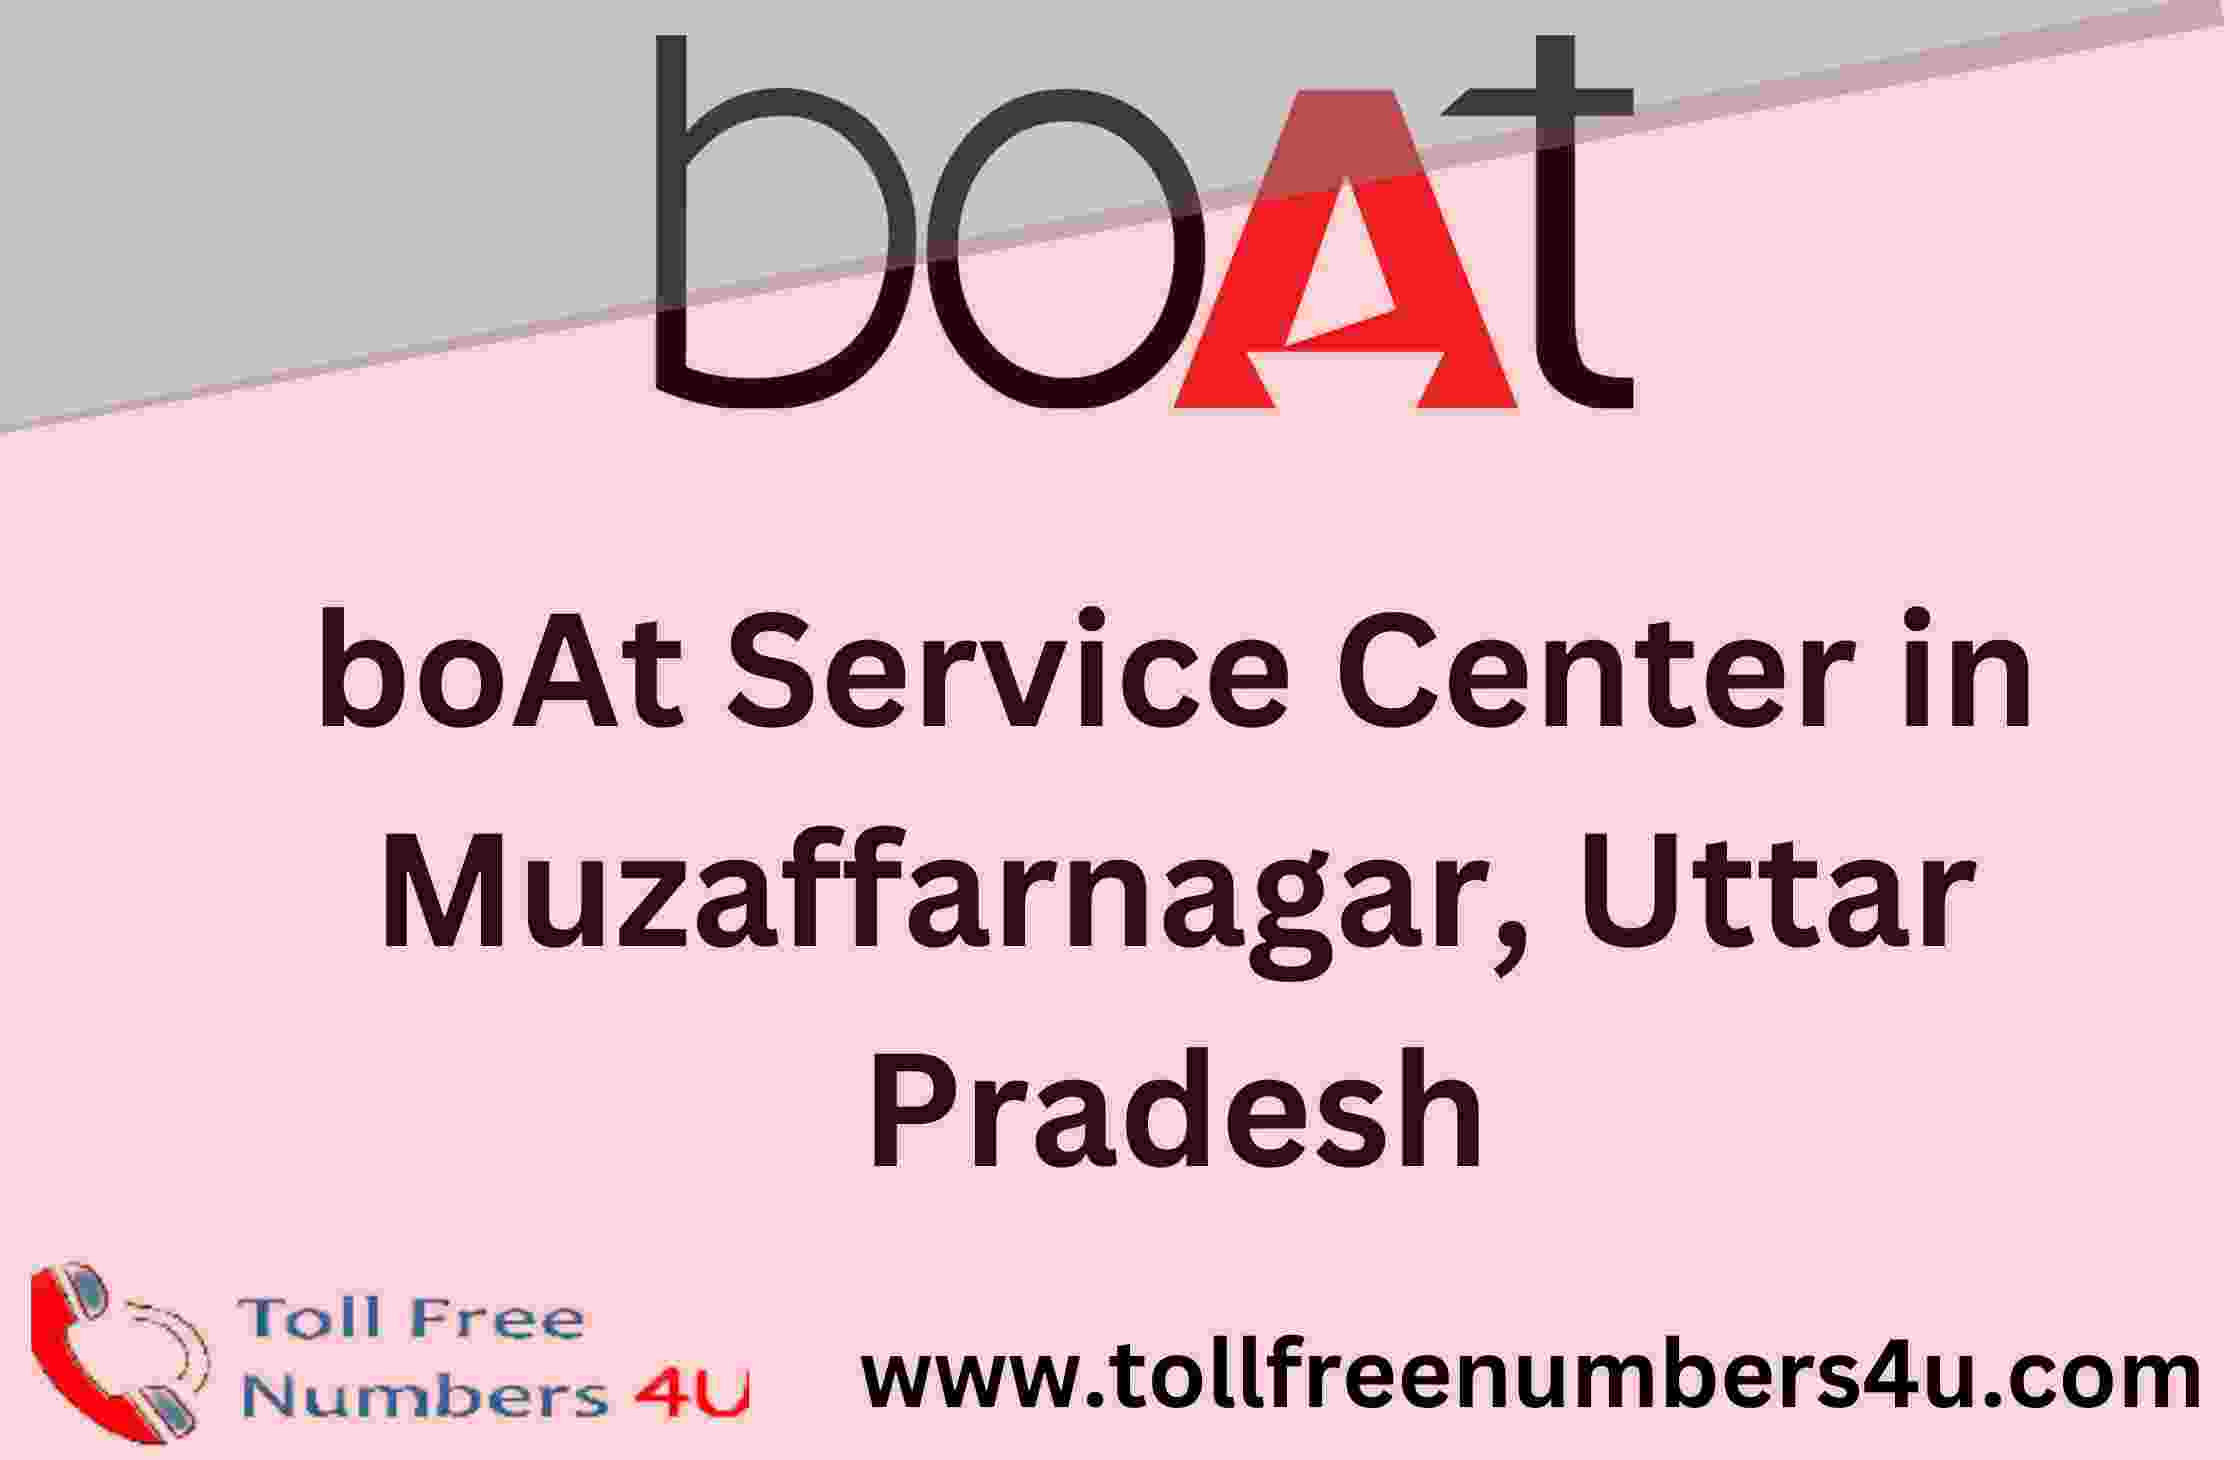 boAt Service Center in Muzaffarnagar - TollFreeNumbers4u